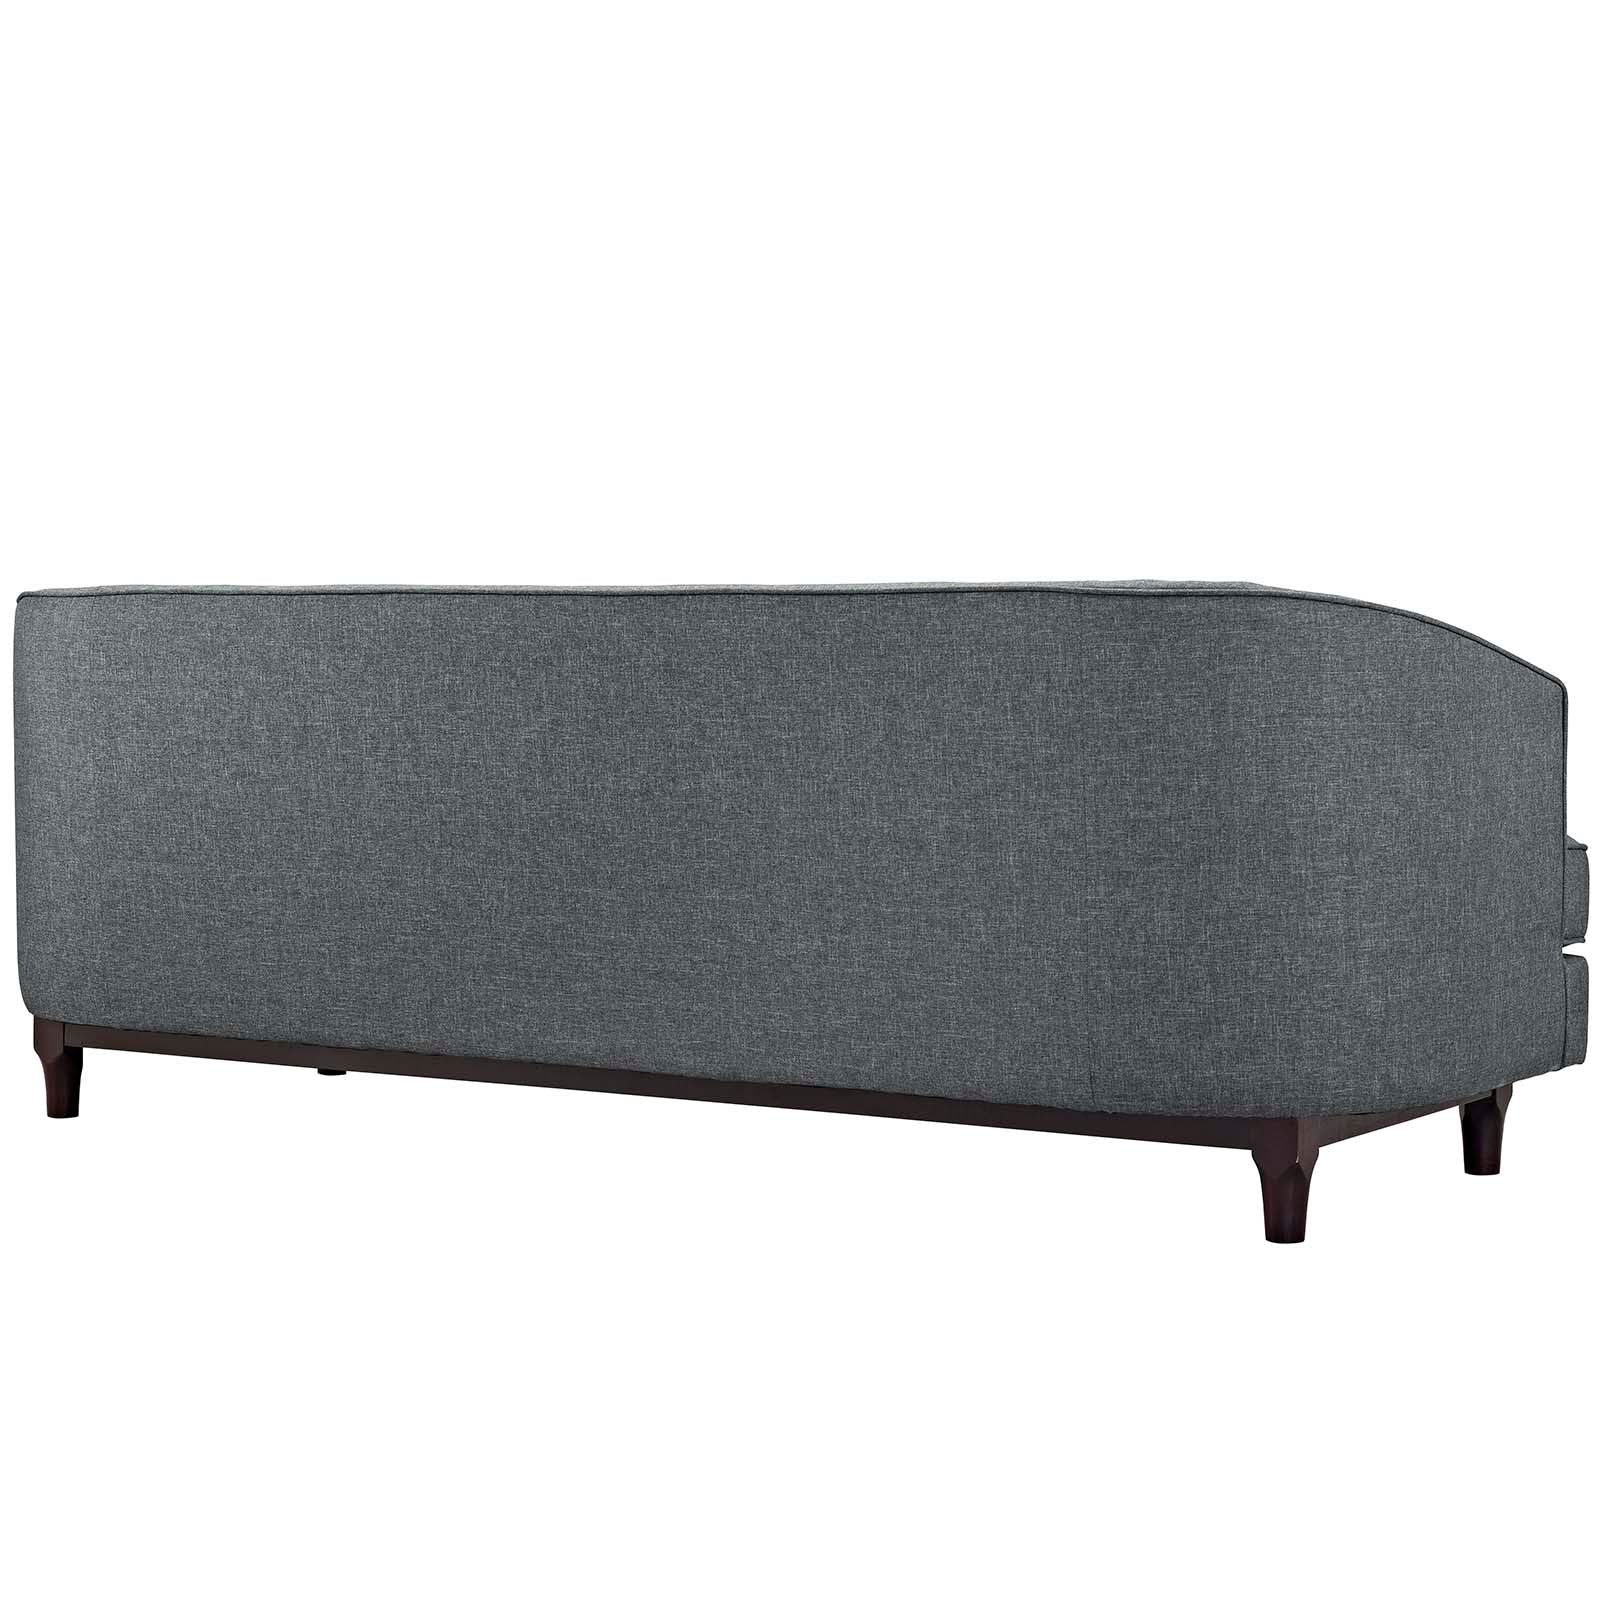 Coast Upholstered Fabric Sofa - East Shore Modern Home Furnishings